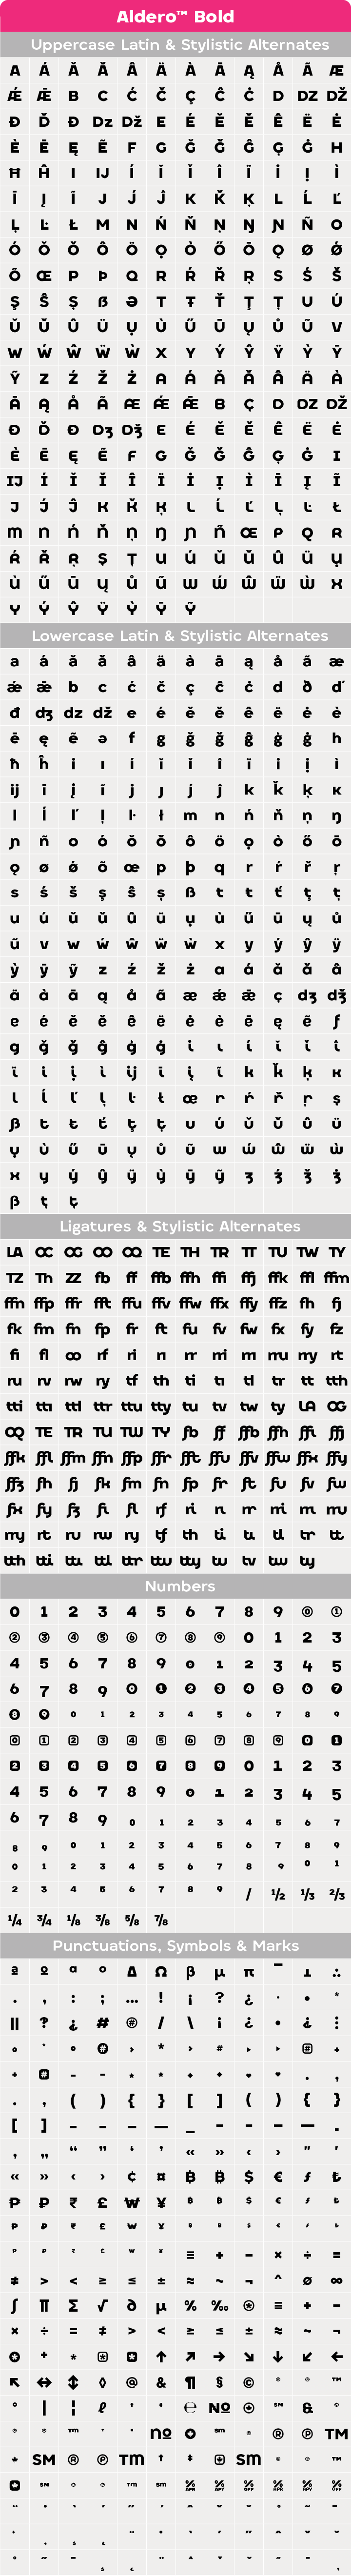 Aldero Bold Glyphs Table7.png